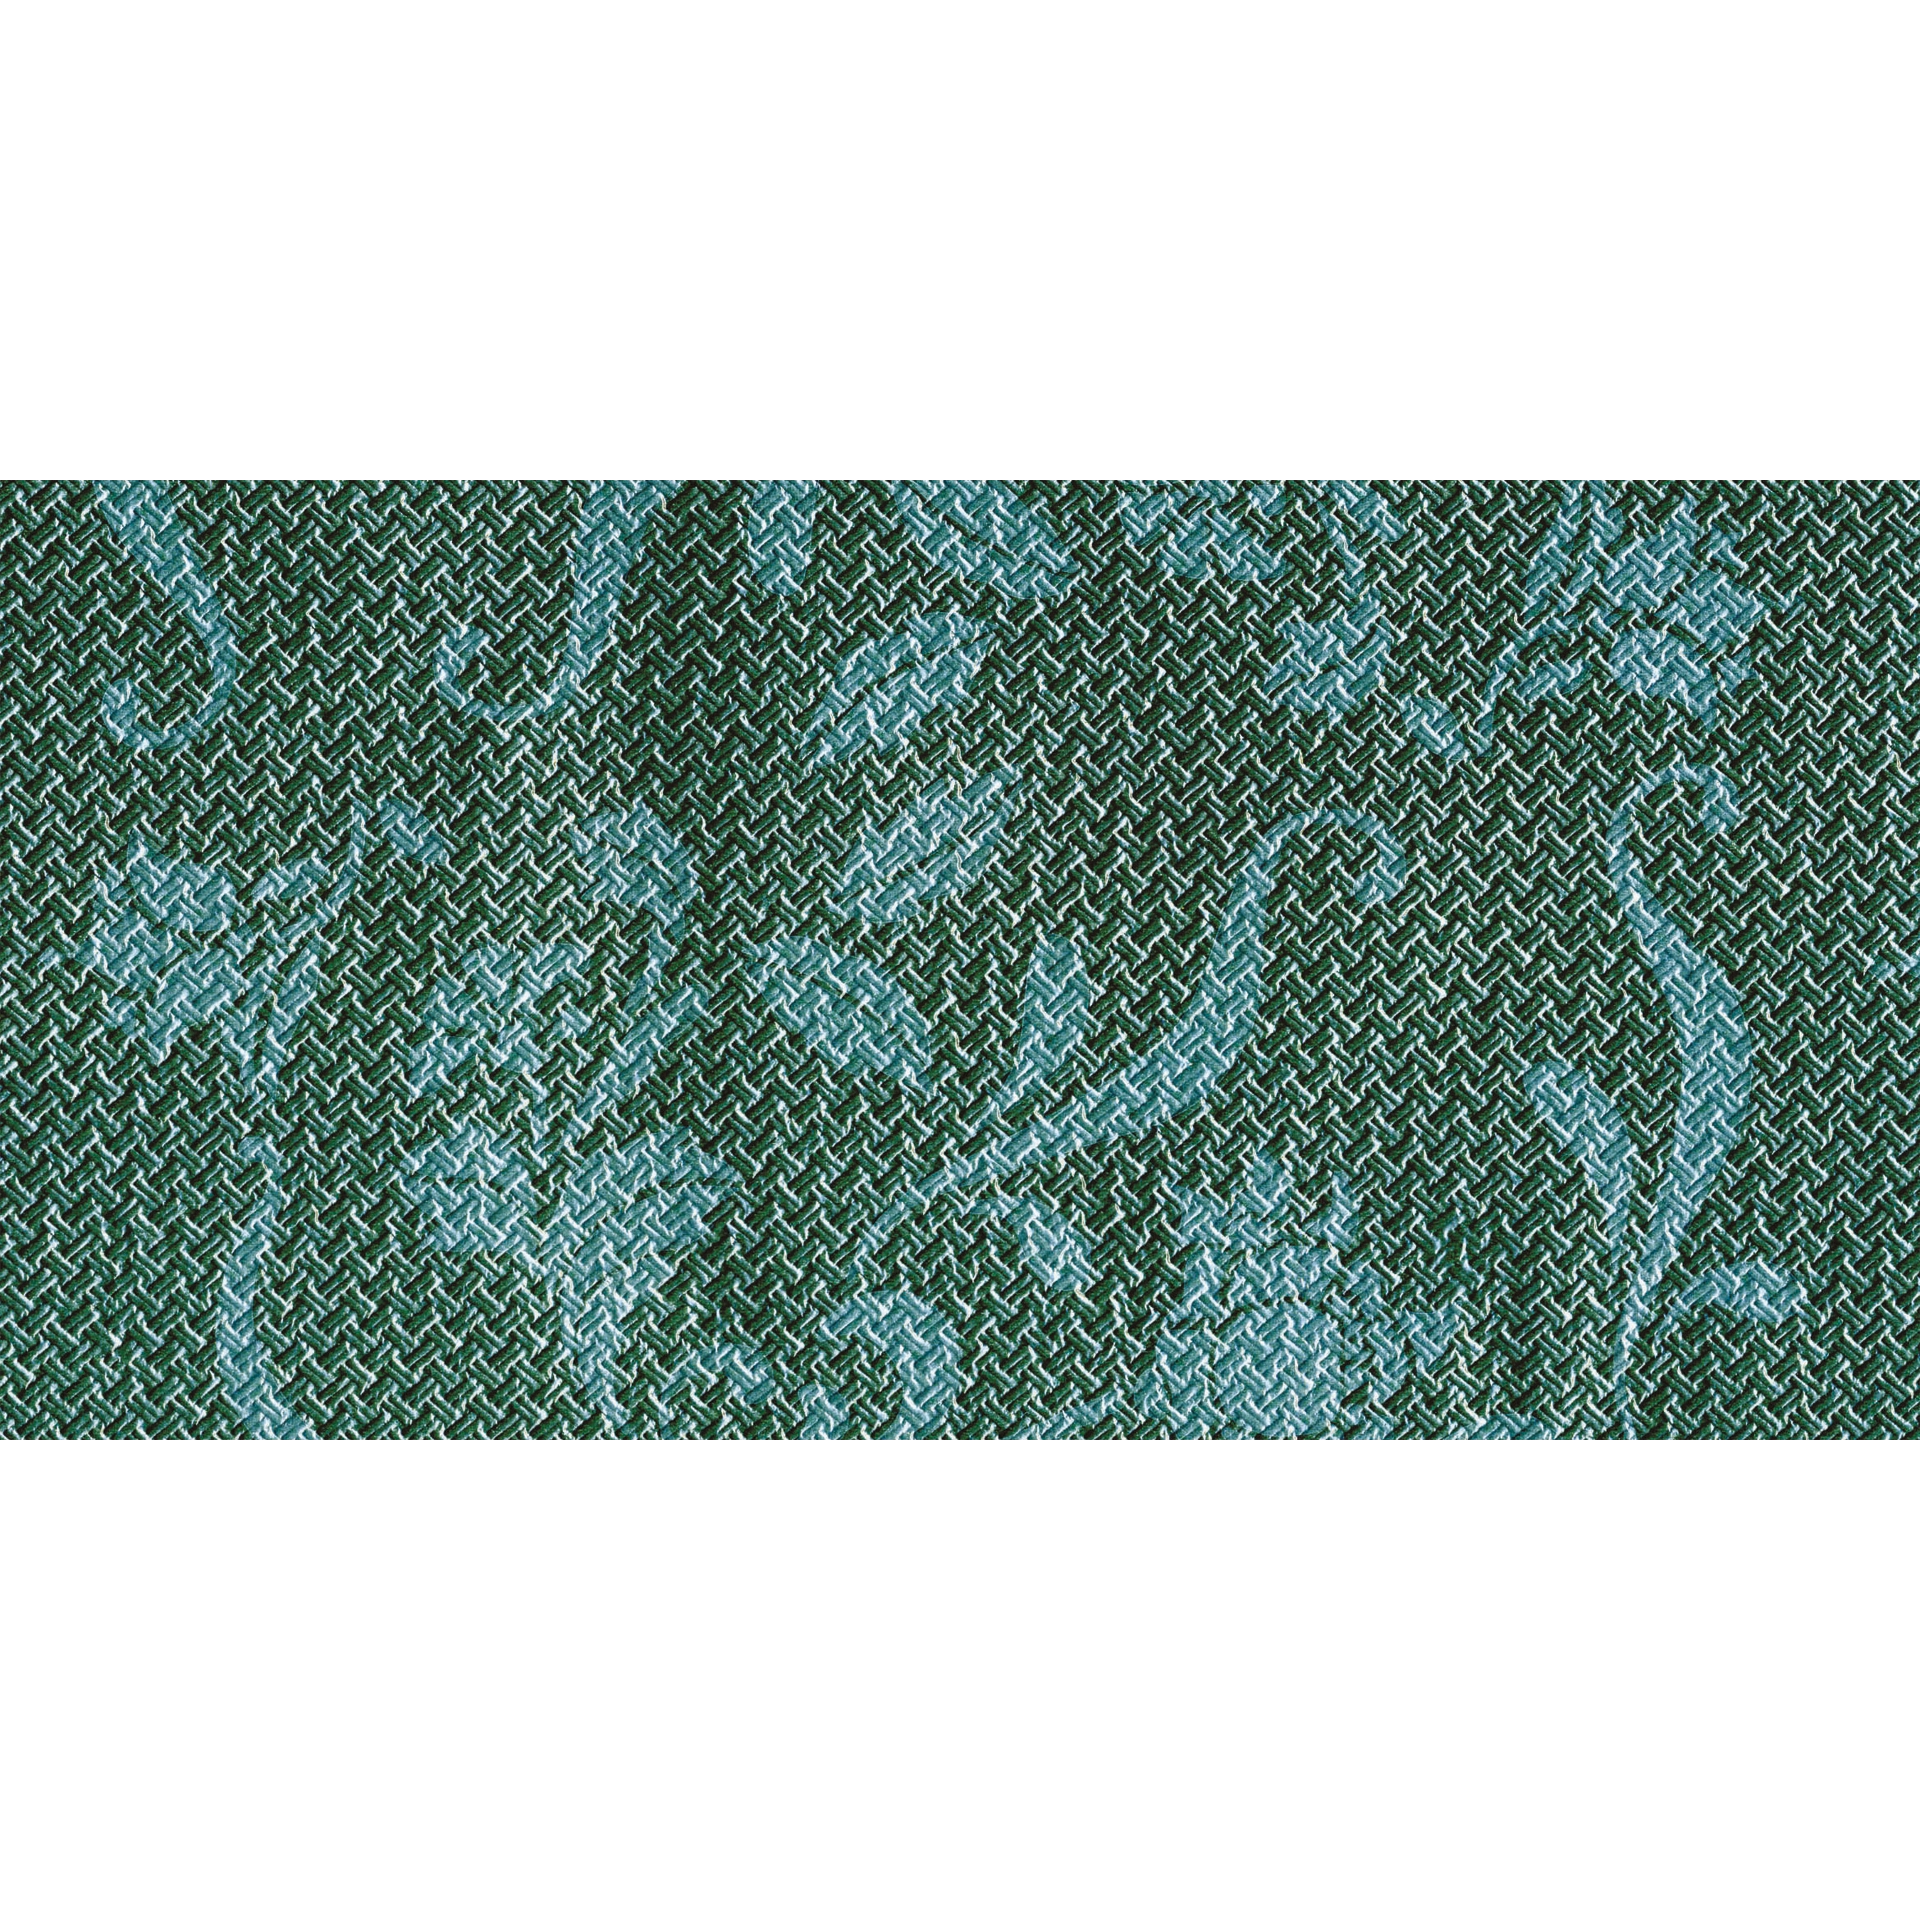 Coprimacchia carta 100x100 cm 2vl. accoppiata Fancy Flower verde scuro